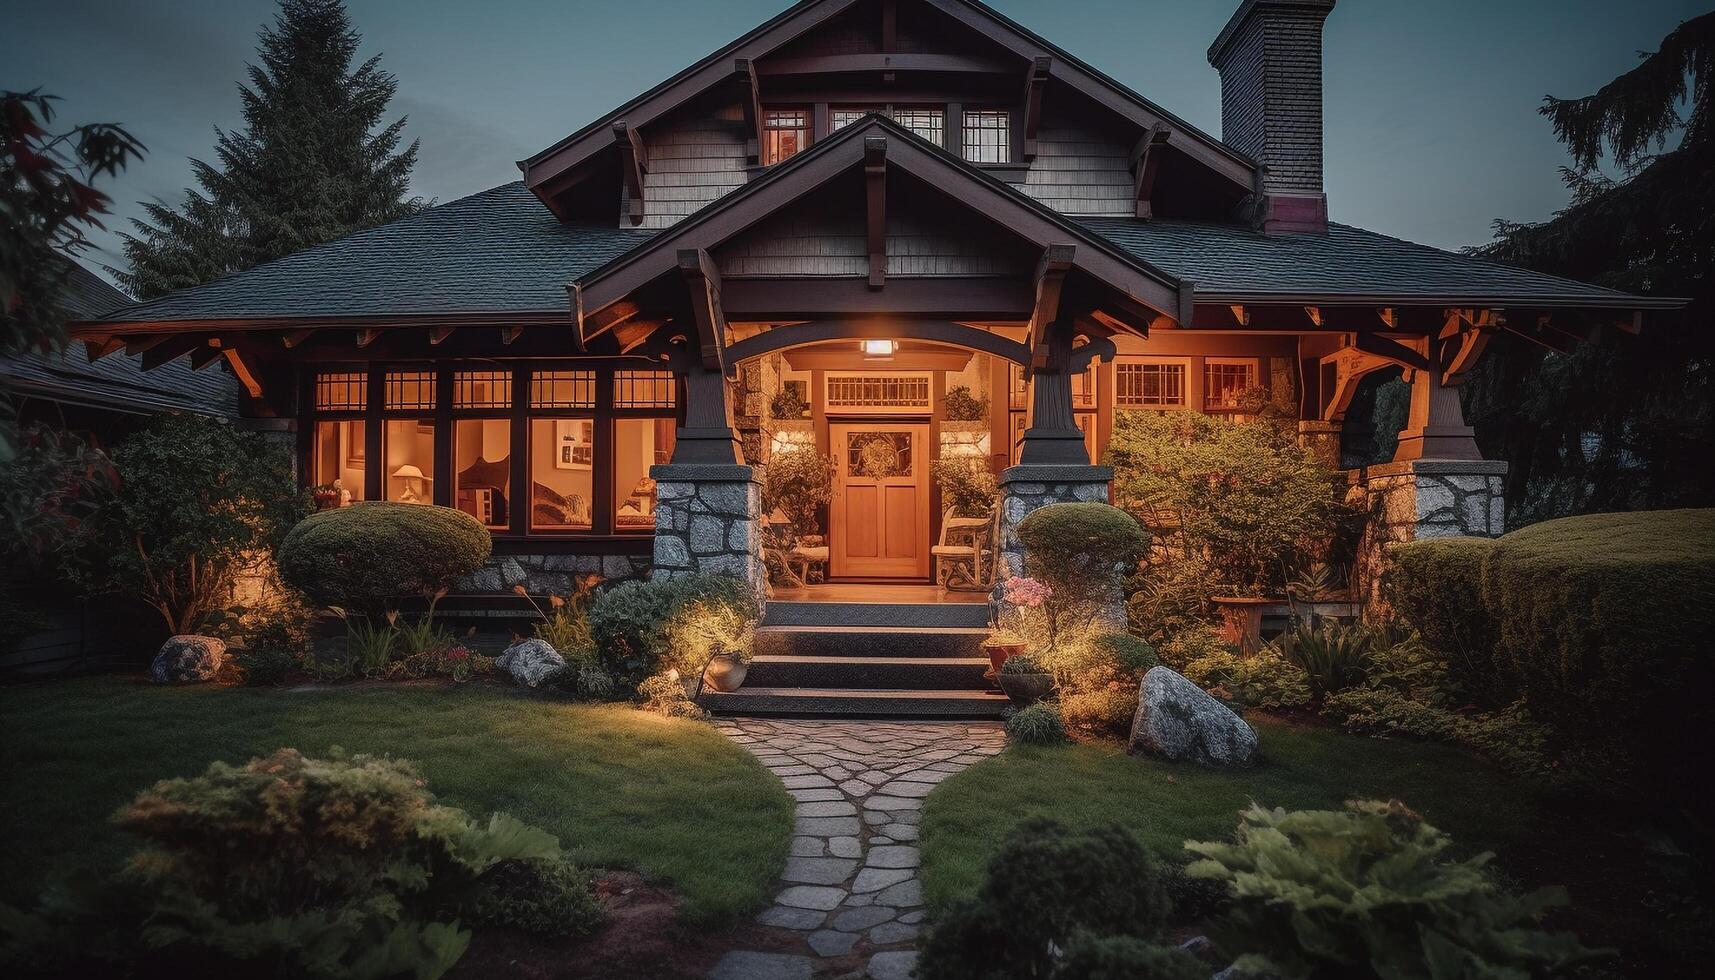 The luxury cottage modern design illuminates the comfortable summer dusk generated by AI photo